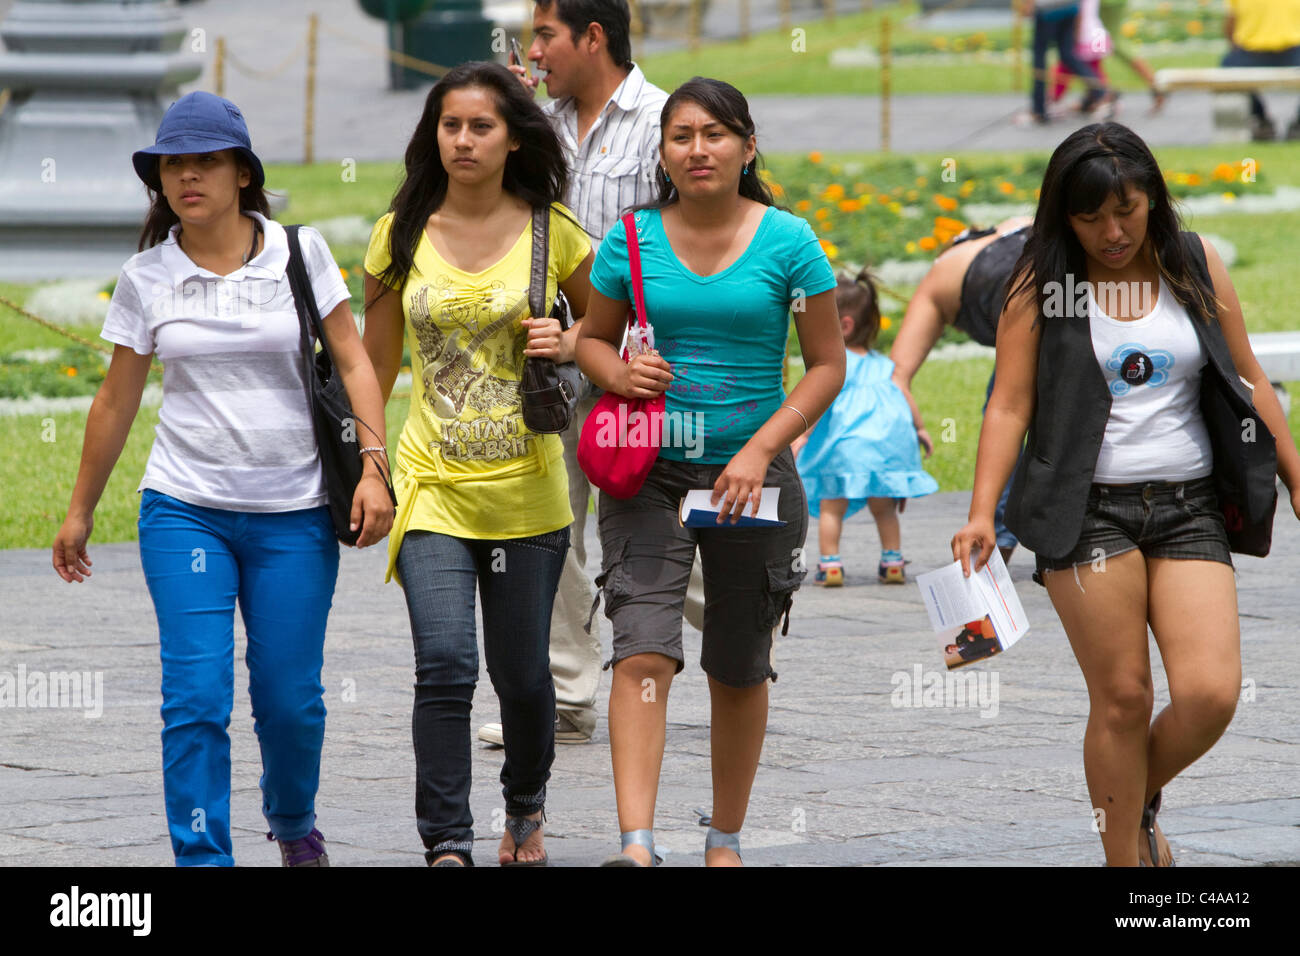 Pedestrians at the Plaza Mayor or Plaza de Armas of Lima, Peru. Stock Photo